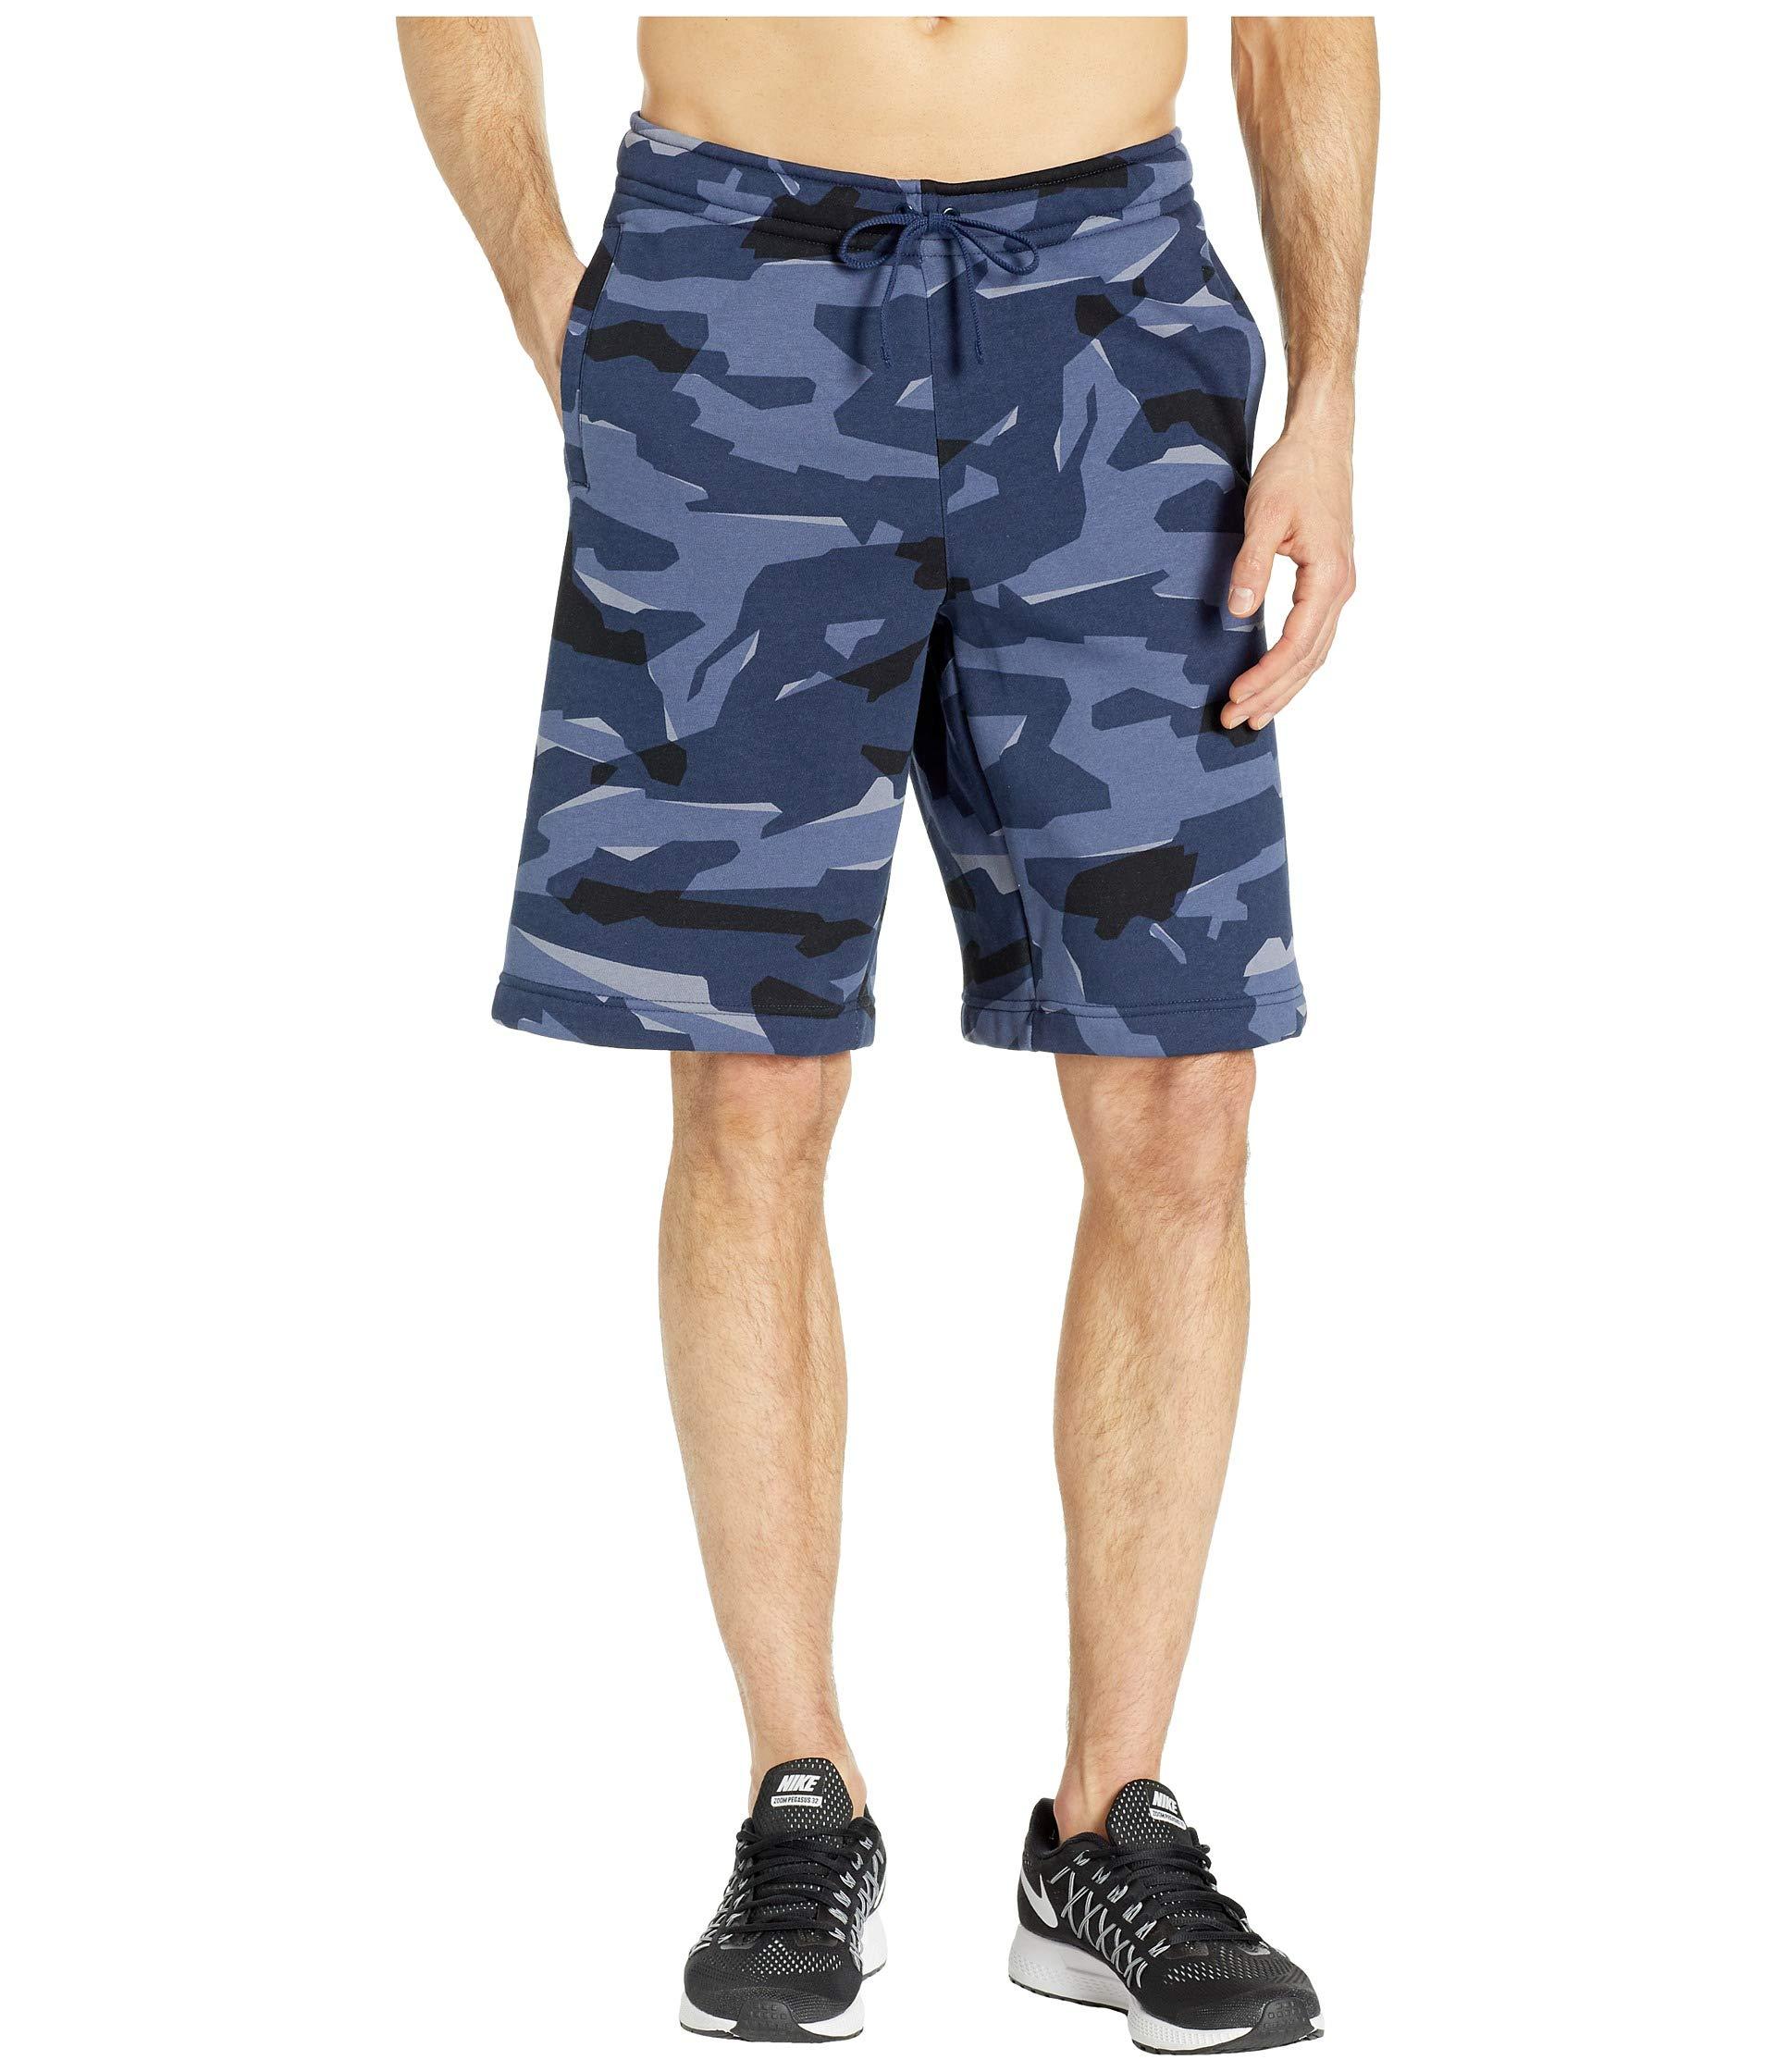 Buy > mens blue camo shorts > in stock